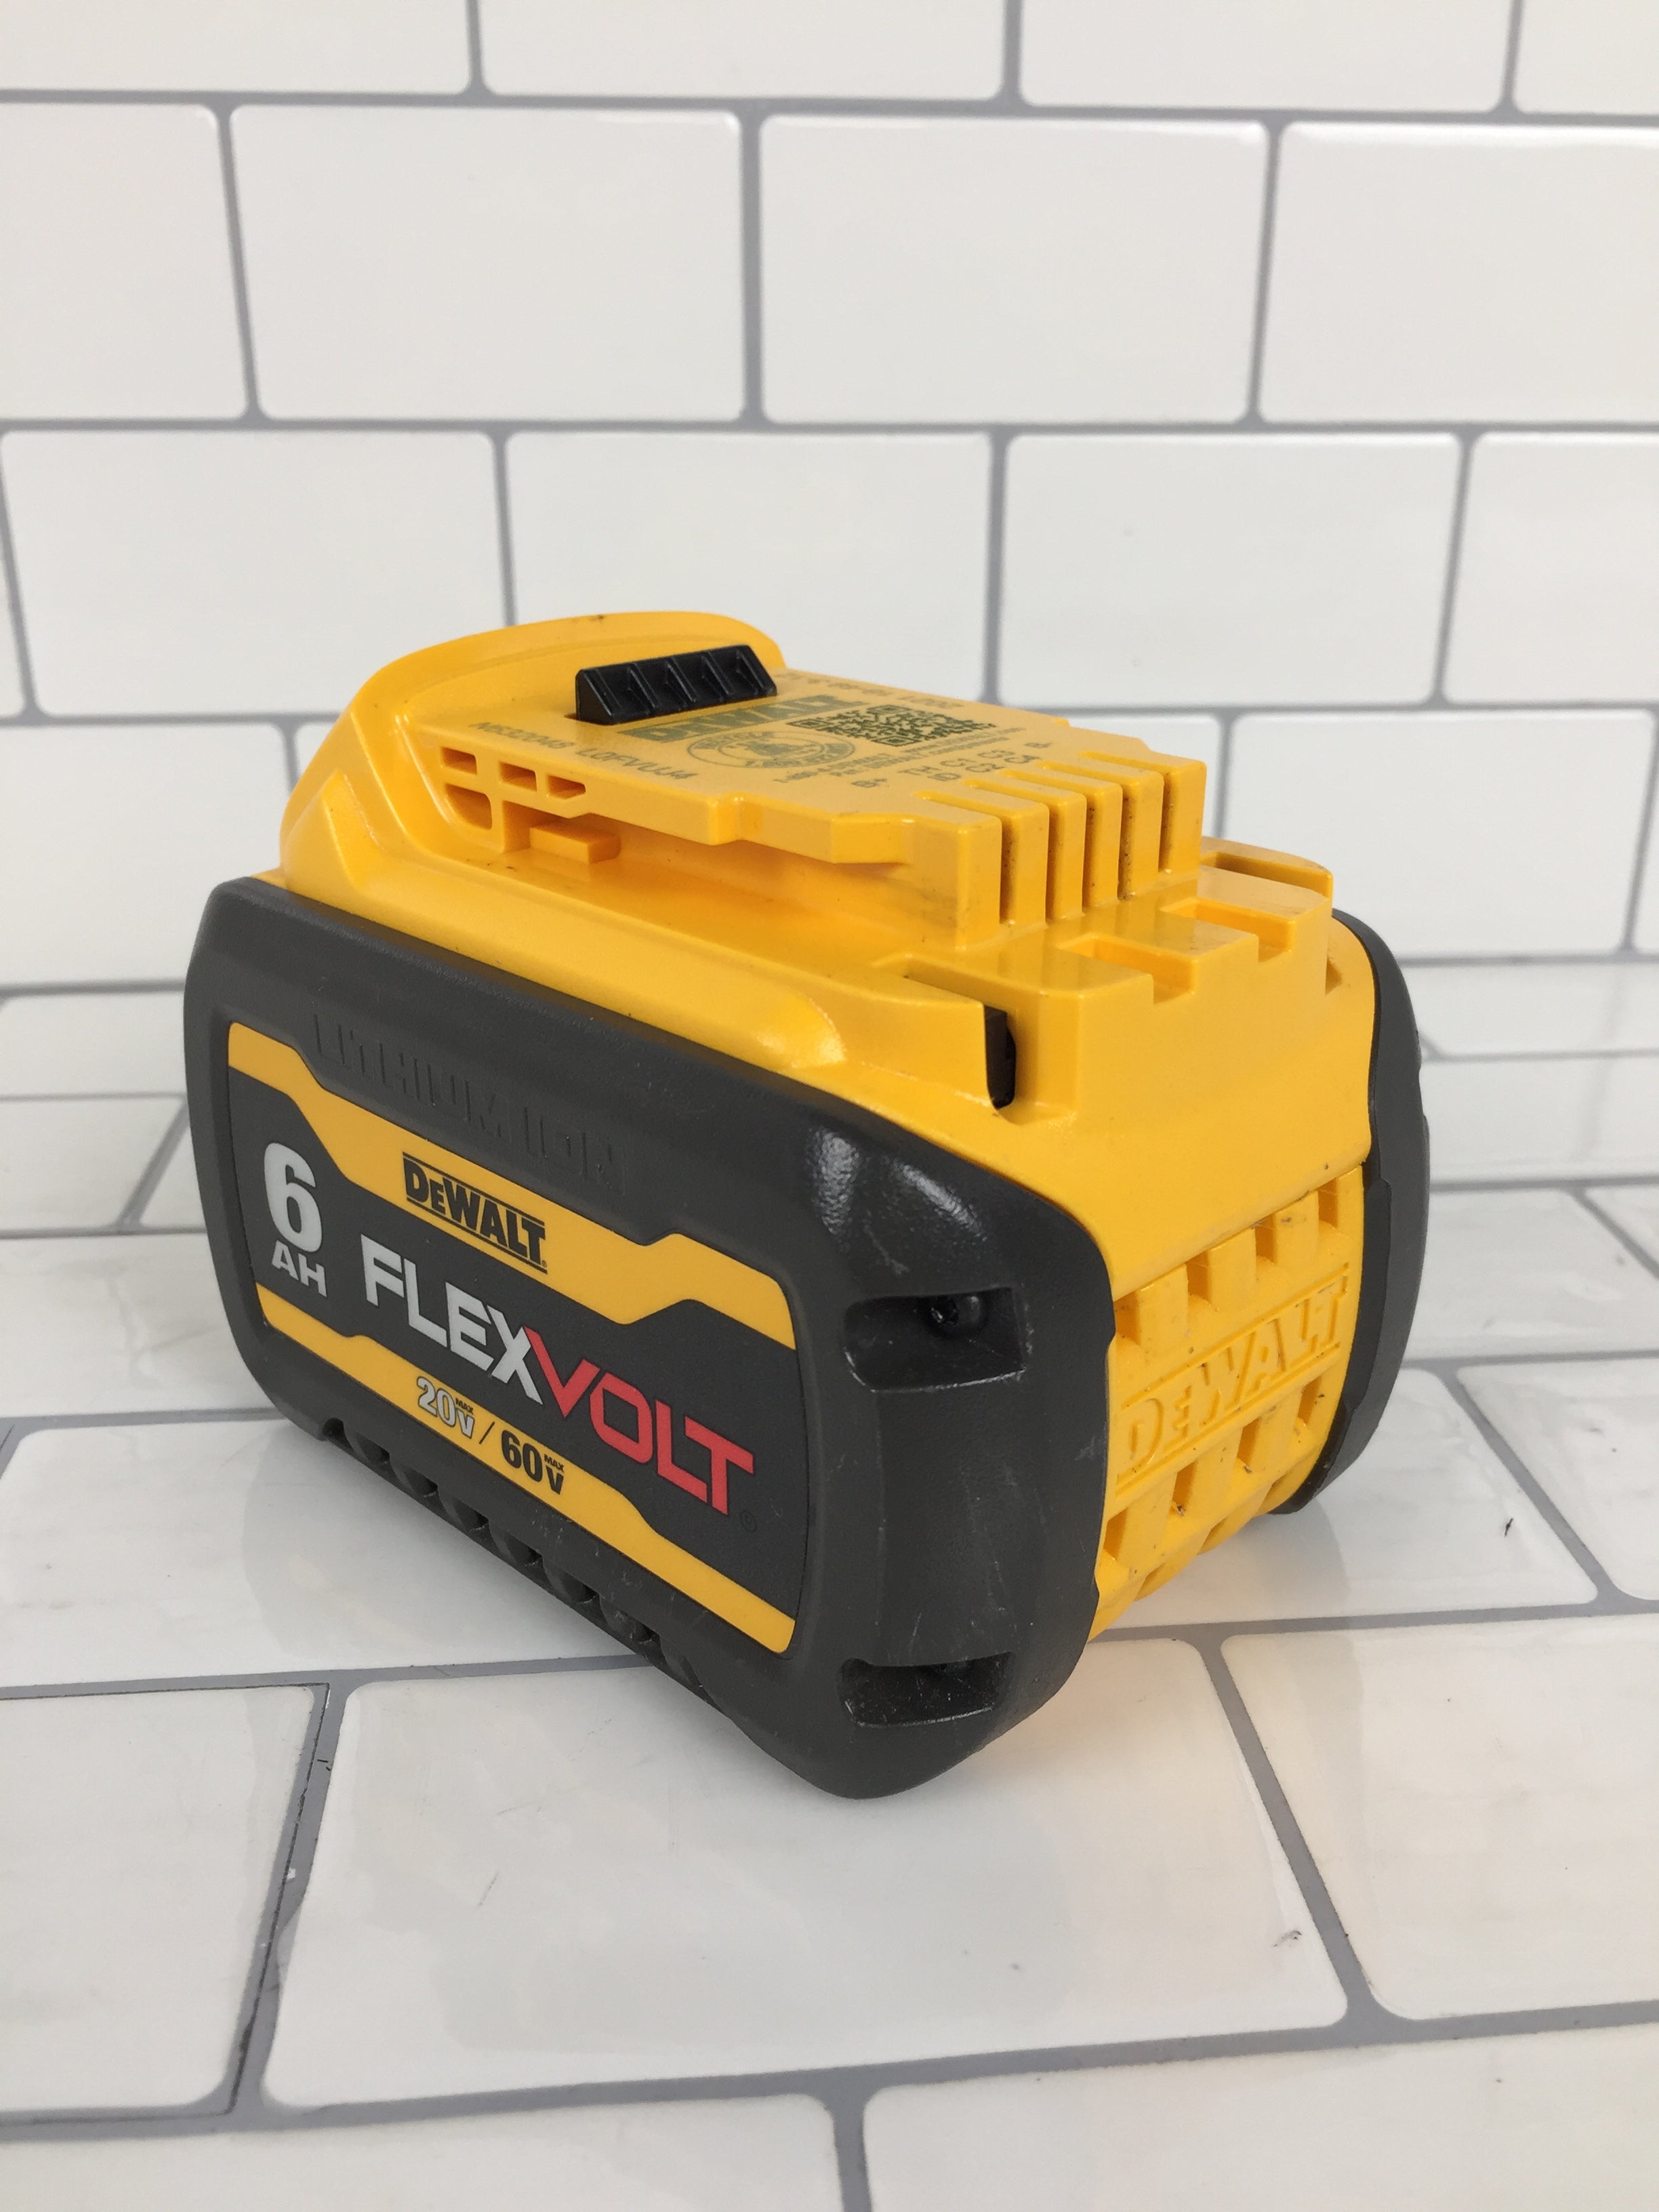 DEWALT FLEXVOLT 20V/60V MAX Battery, 6.0-Ah (DCB606) (7351897817326)